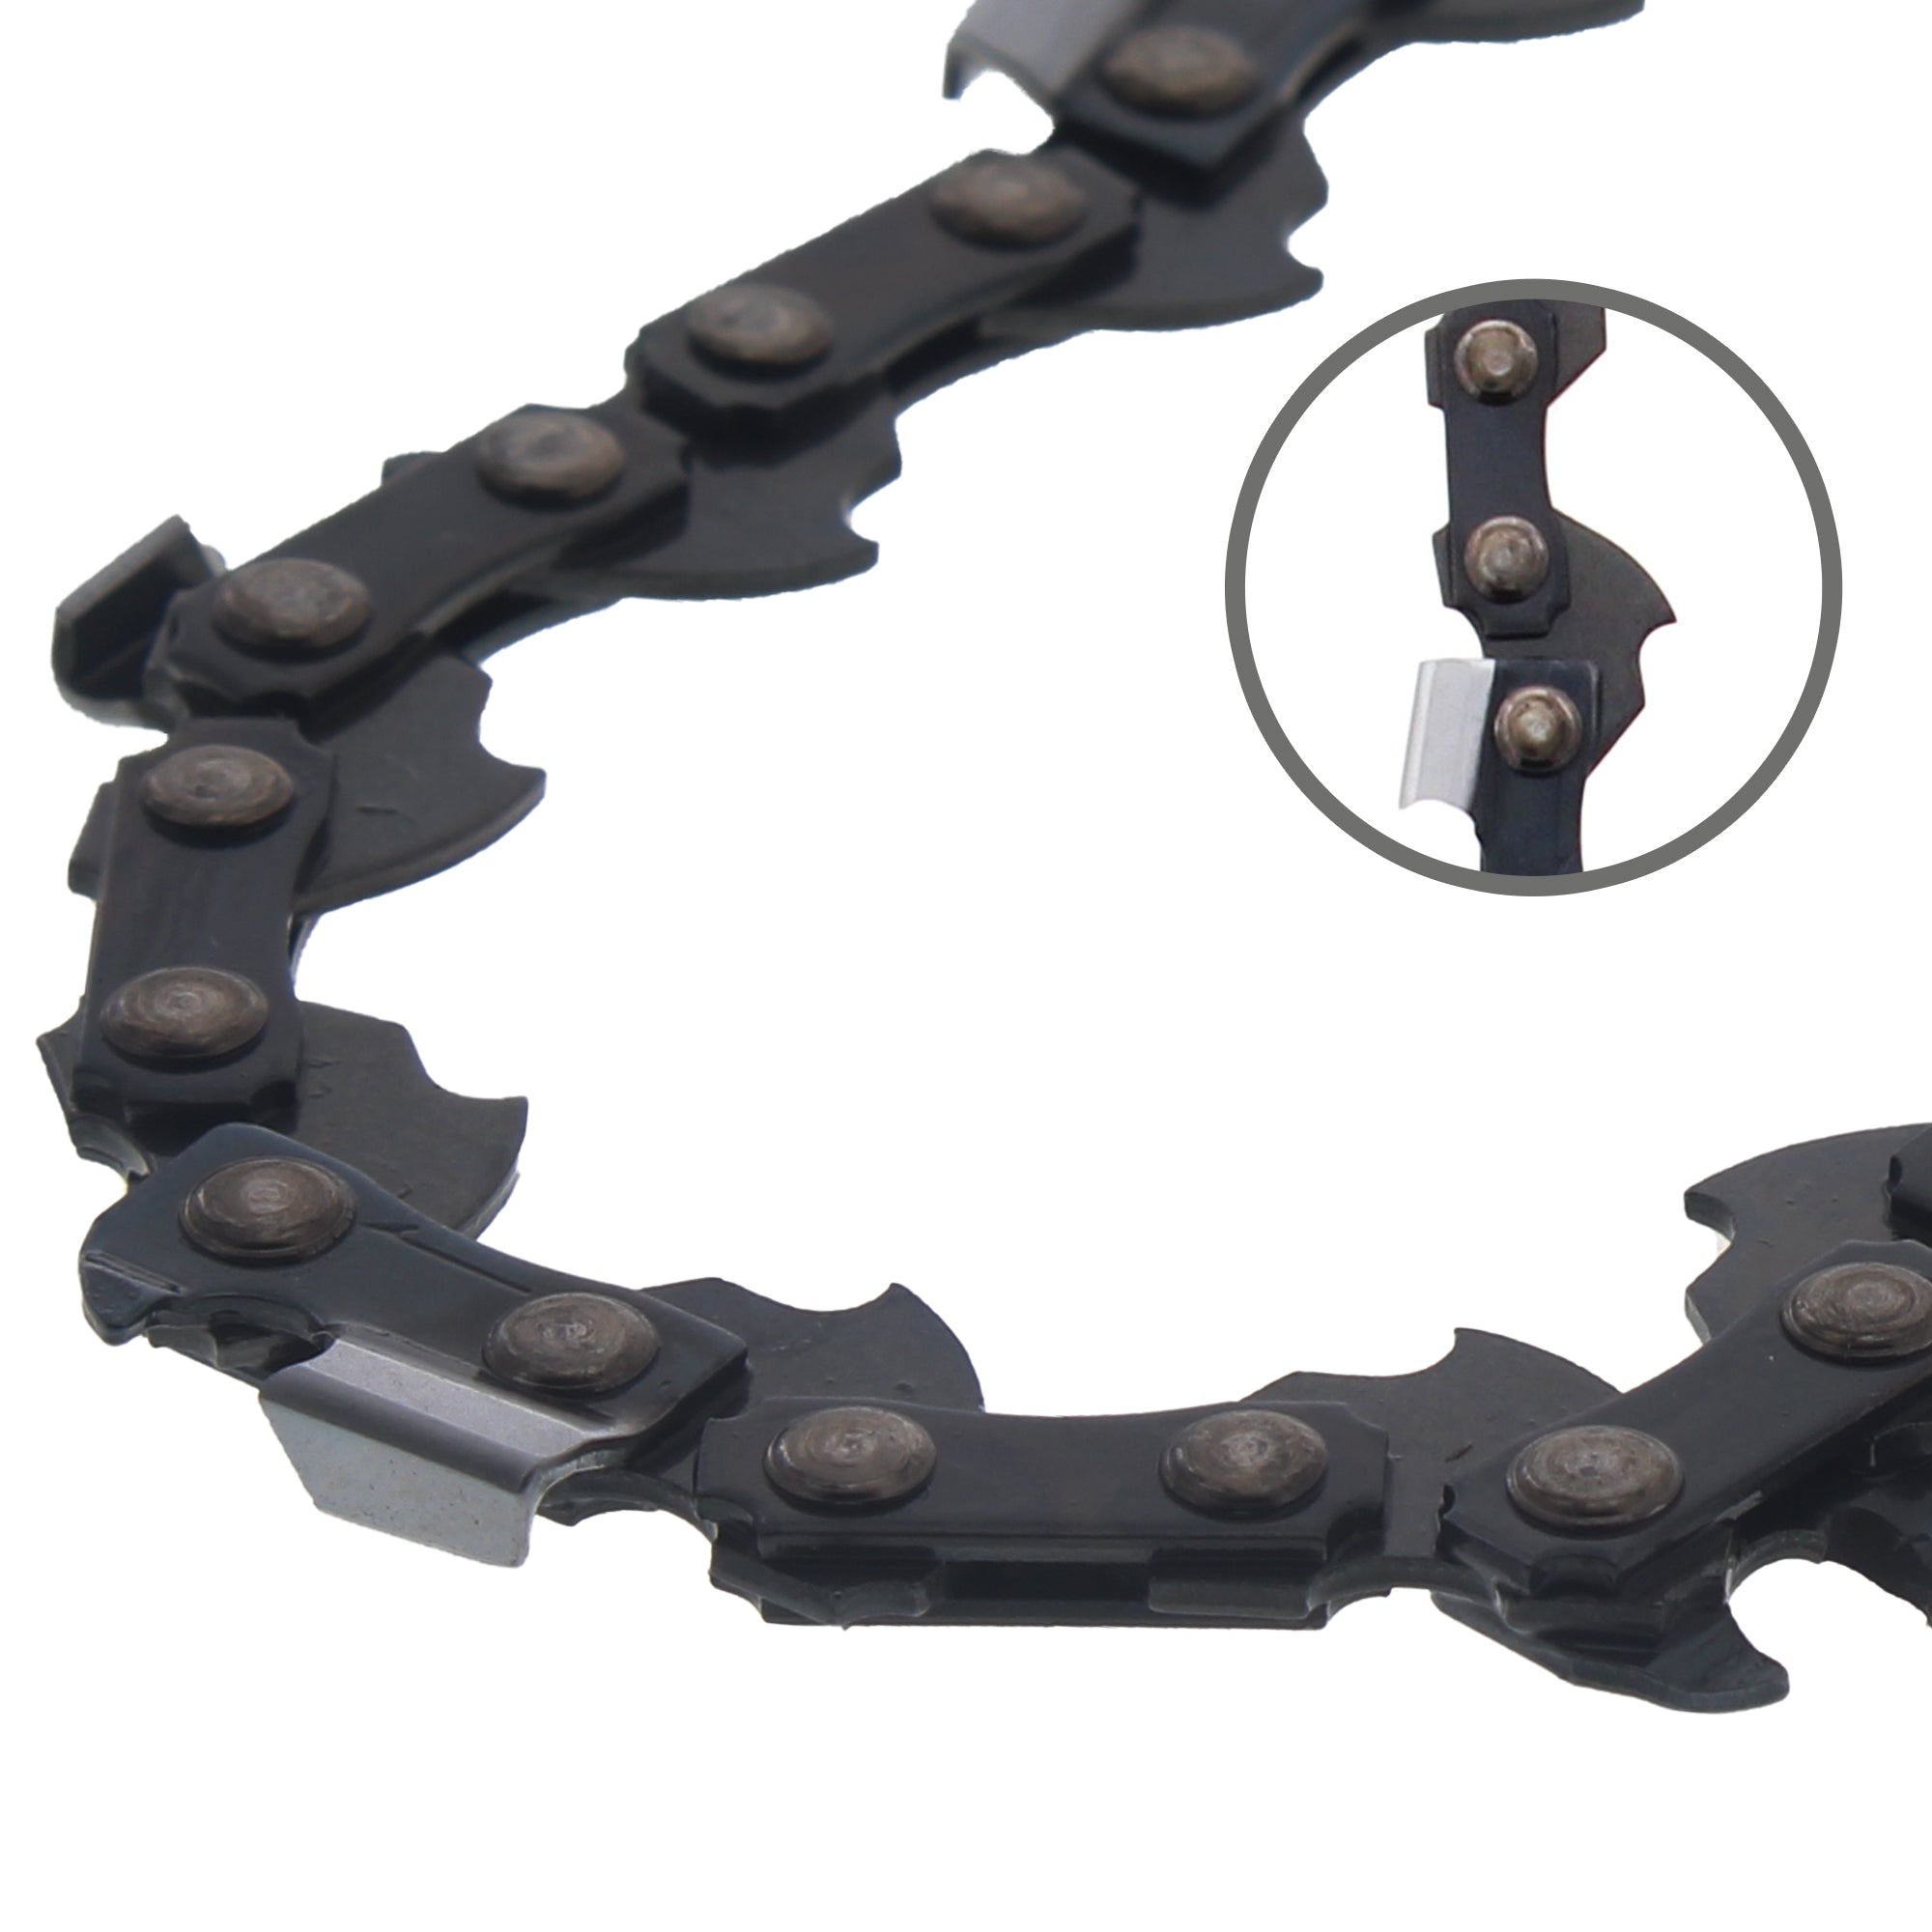 Chainsaw Chain Bulk Reel Semi Chisel 25 Foot .050 3/8 Pitch Low Profile